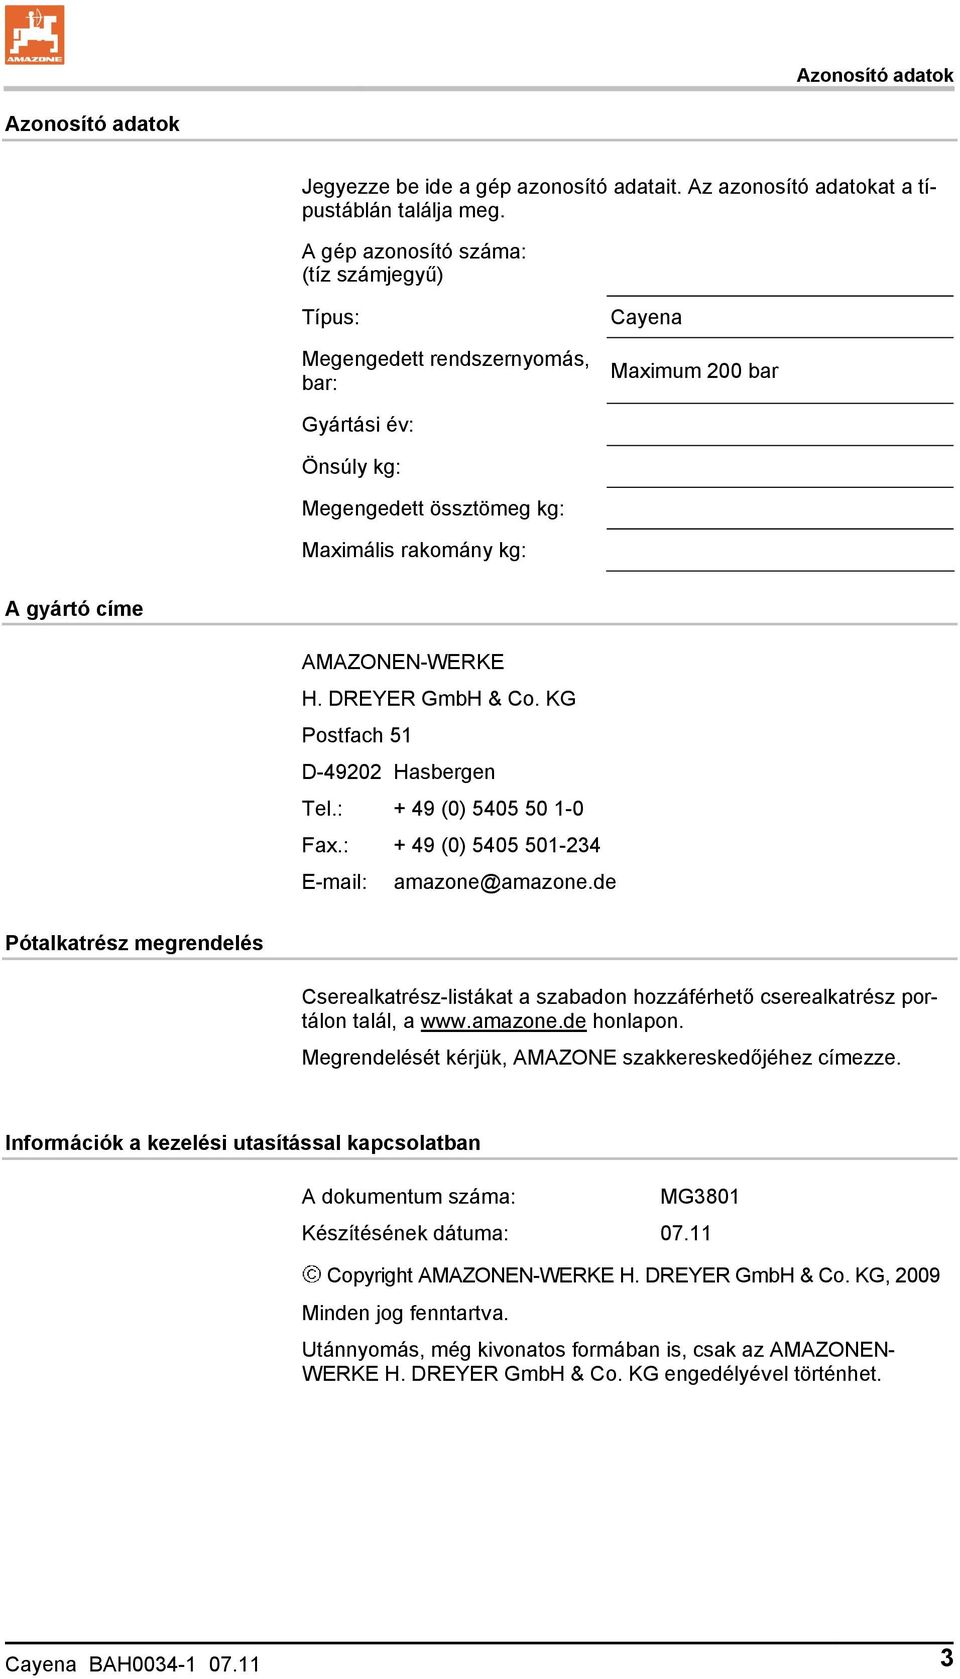 AMAZONEN-WERKE H. DREYER GmbH & Co. KG Postfach 51 D-49202 Hasbergen Tel.: + 49 (0) 5405 50 1-0 Fax.: + 49 (0) 5405 501-234 E-mail: amazone@amazone.